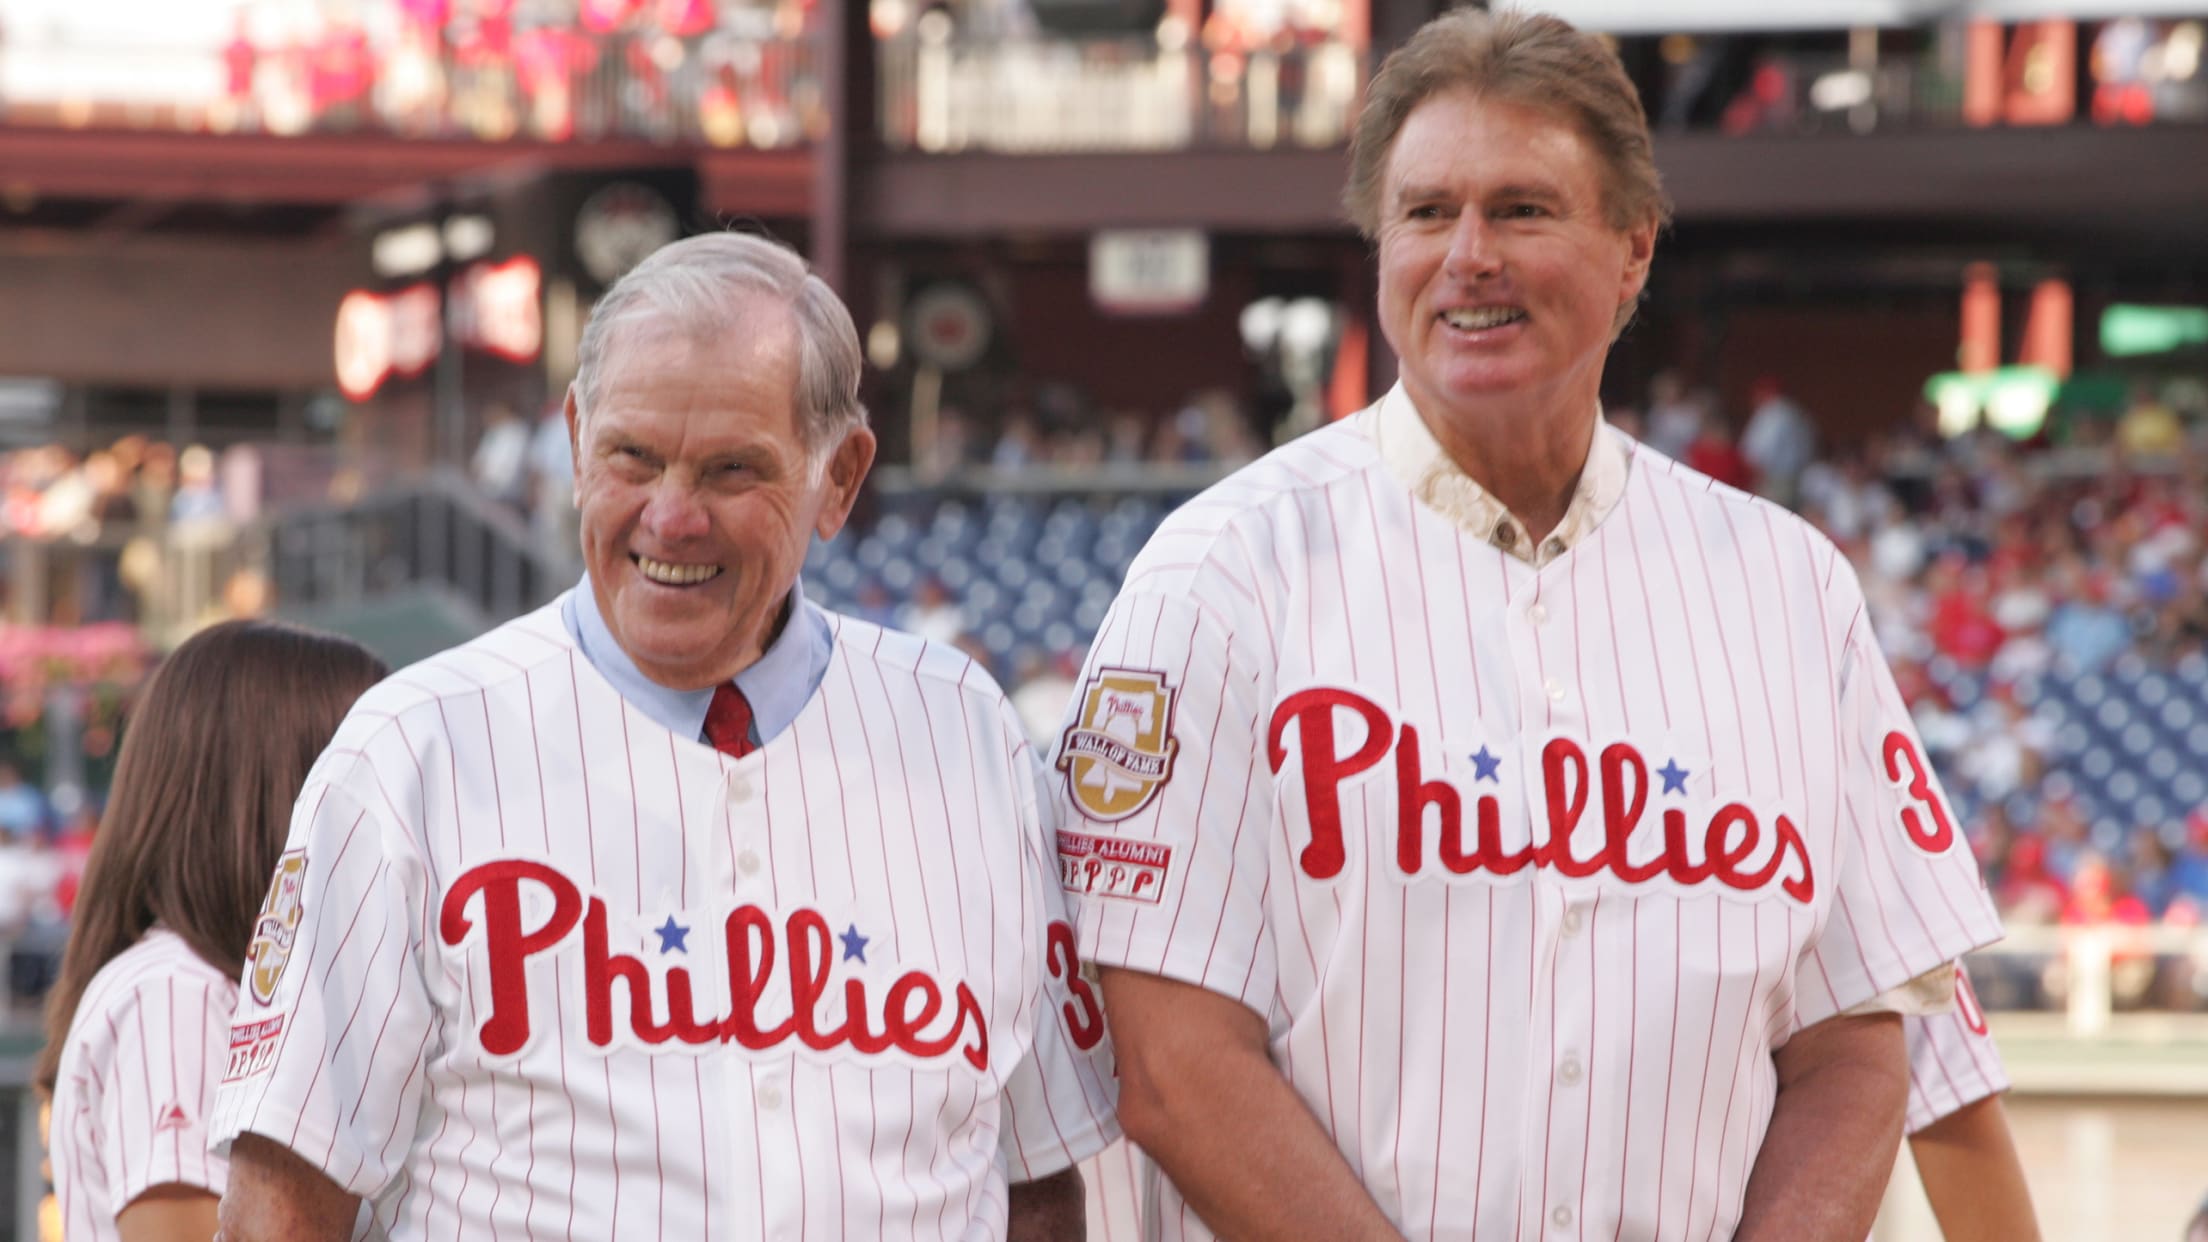 70s Philadelphia Phillies MLB Baseball Jersey t-shirt Large - The